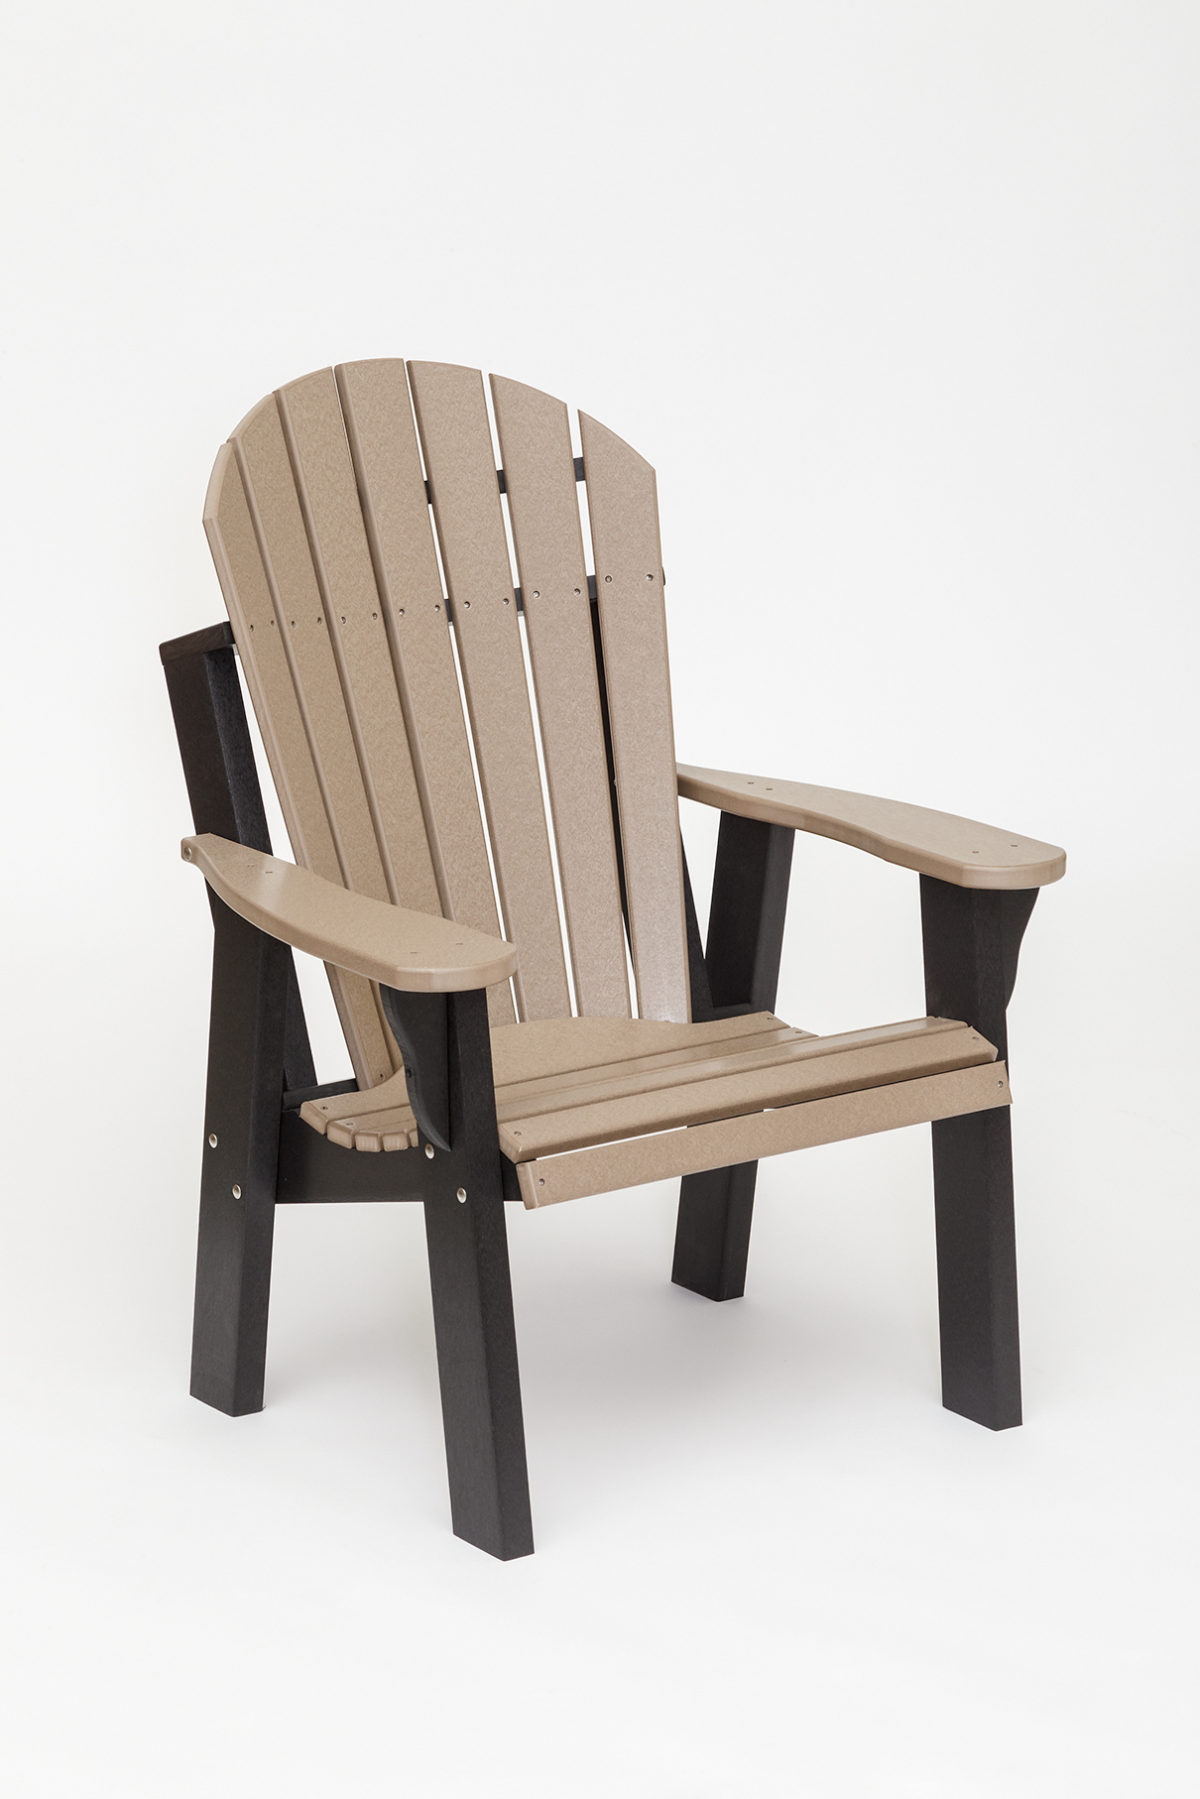 senior adirondack chair wood